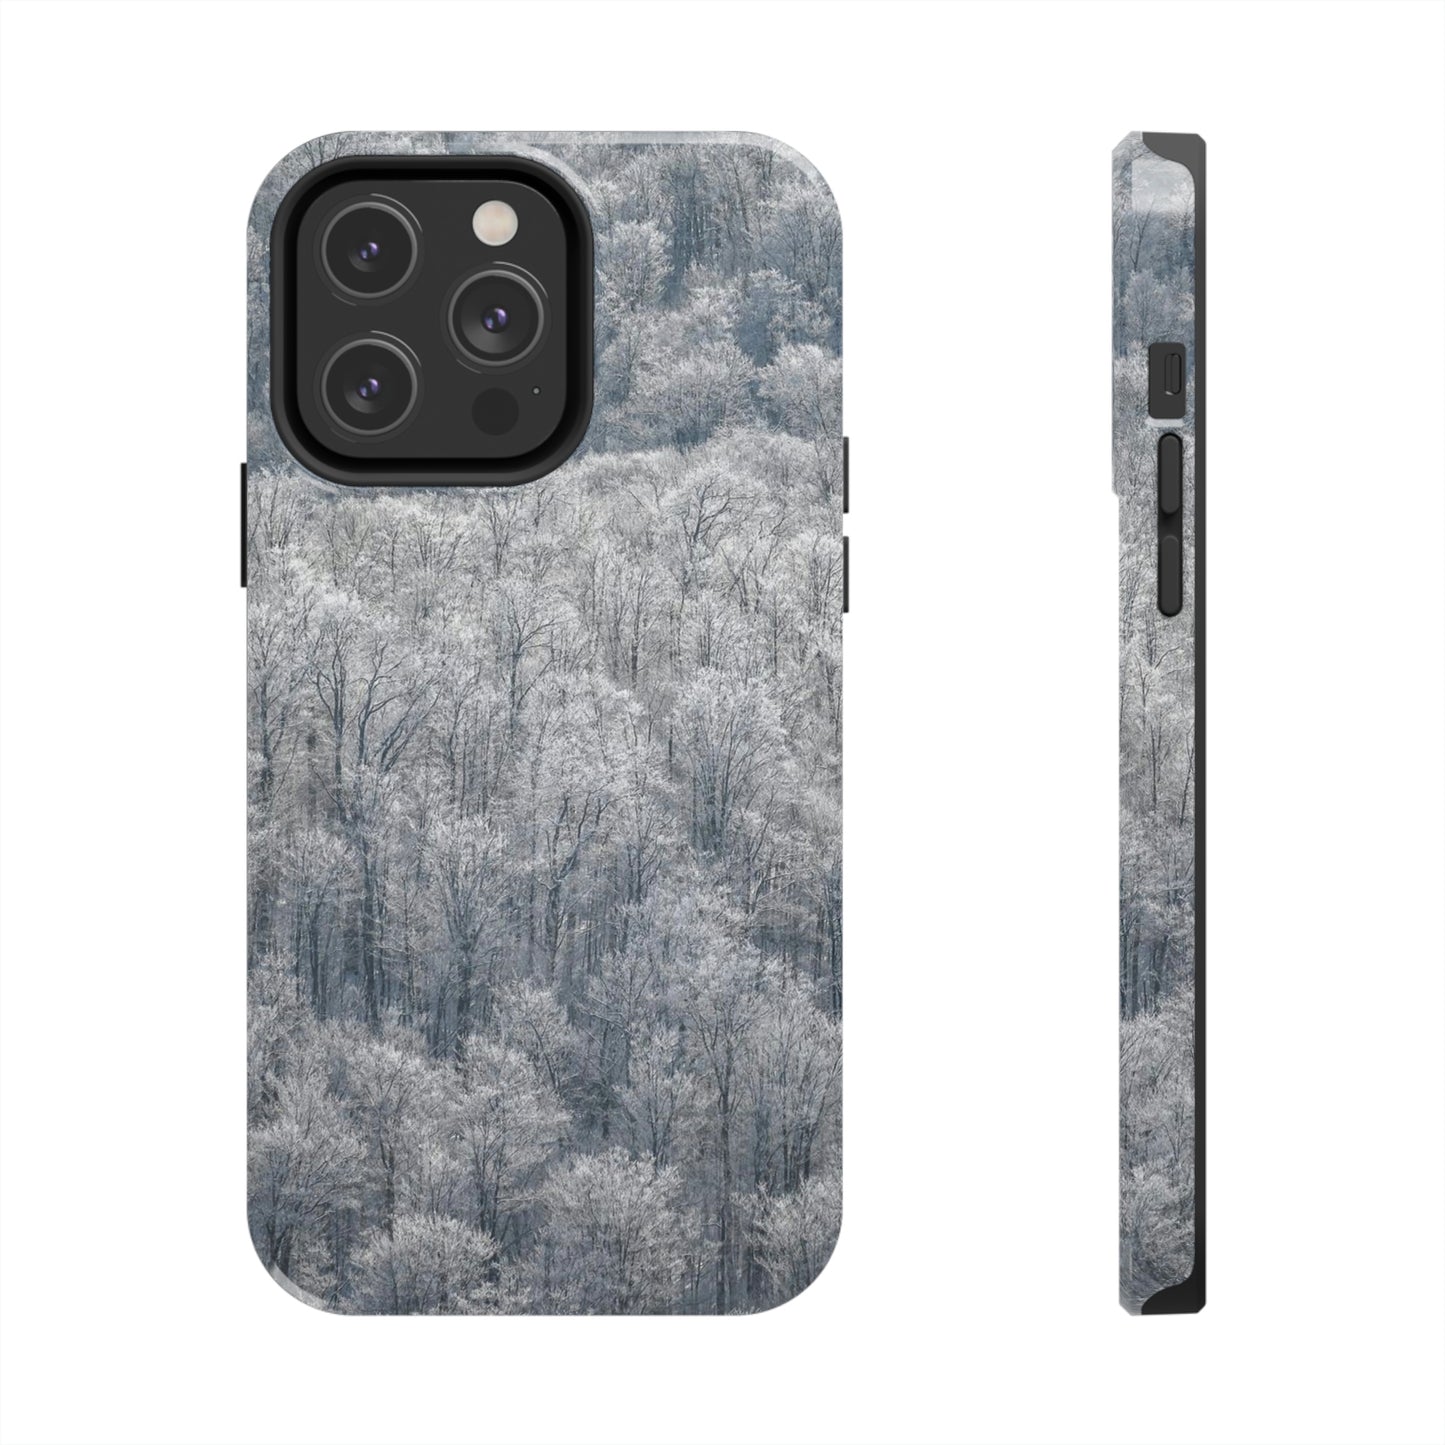 Impact Resistant Phone Case - Frozen trees